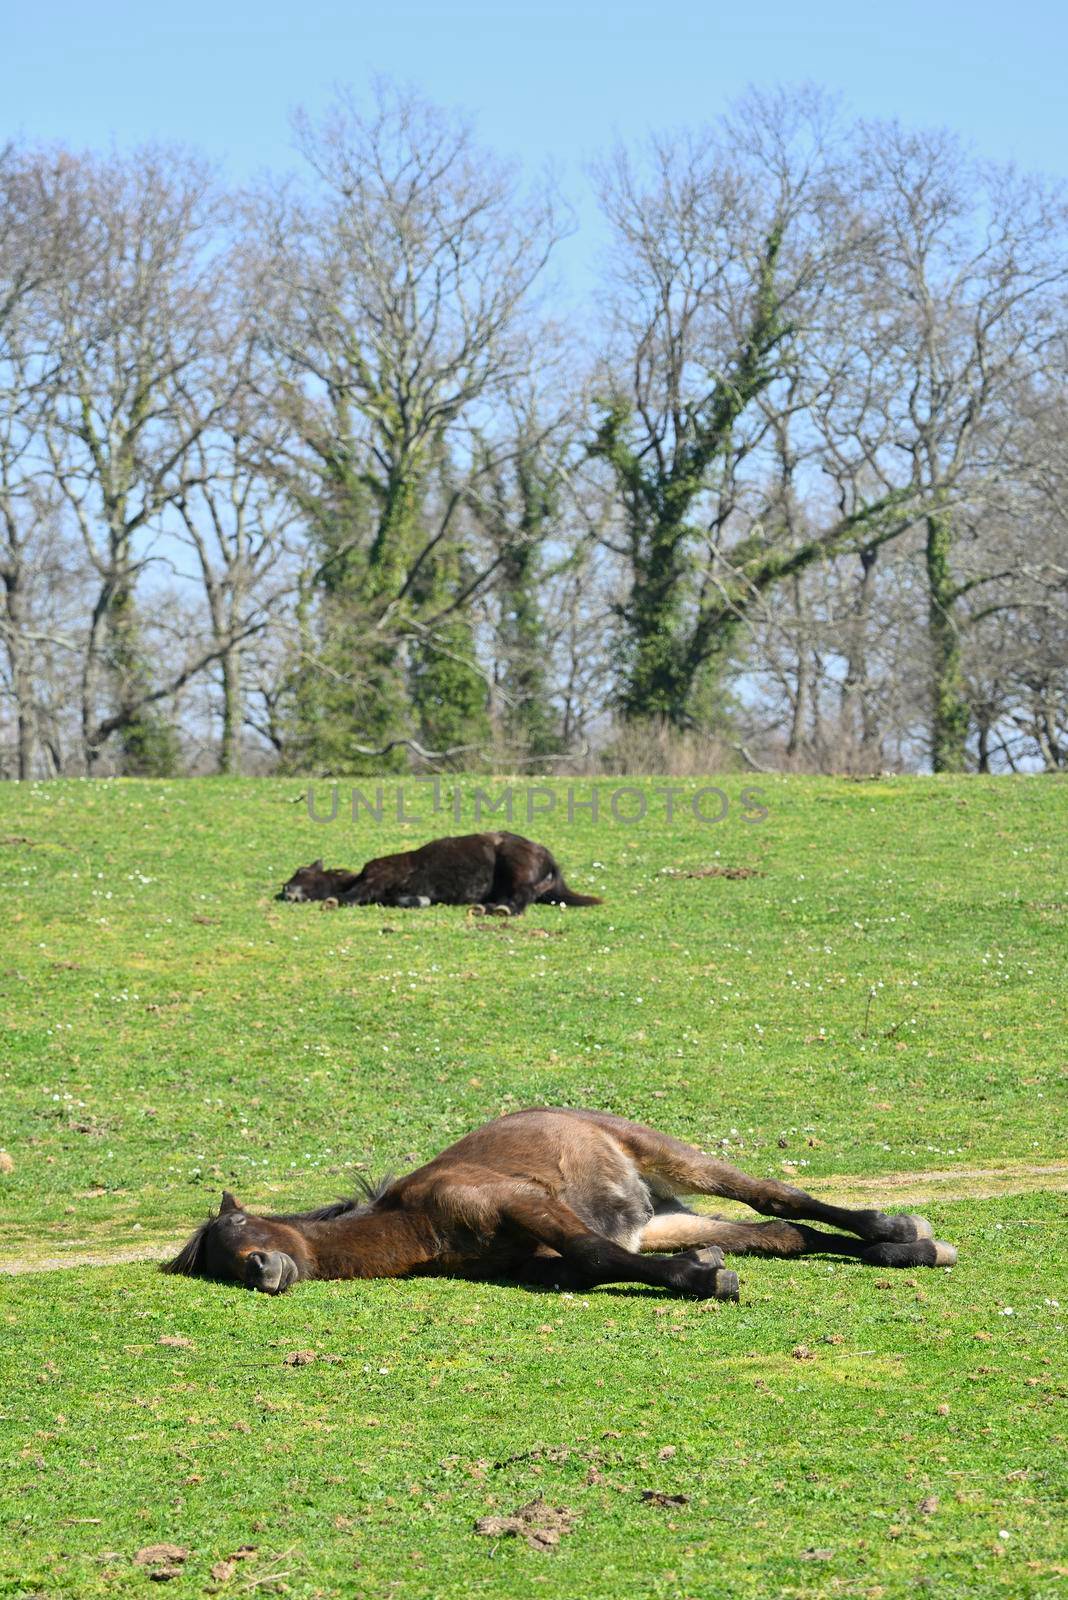 Horses sleeping on a green grass under the sun.